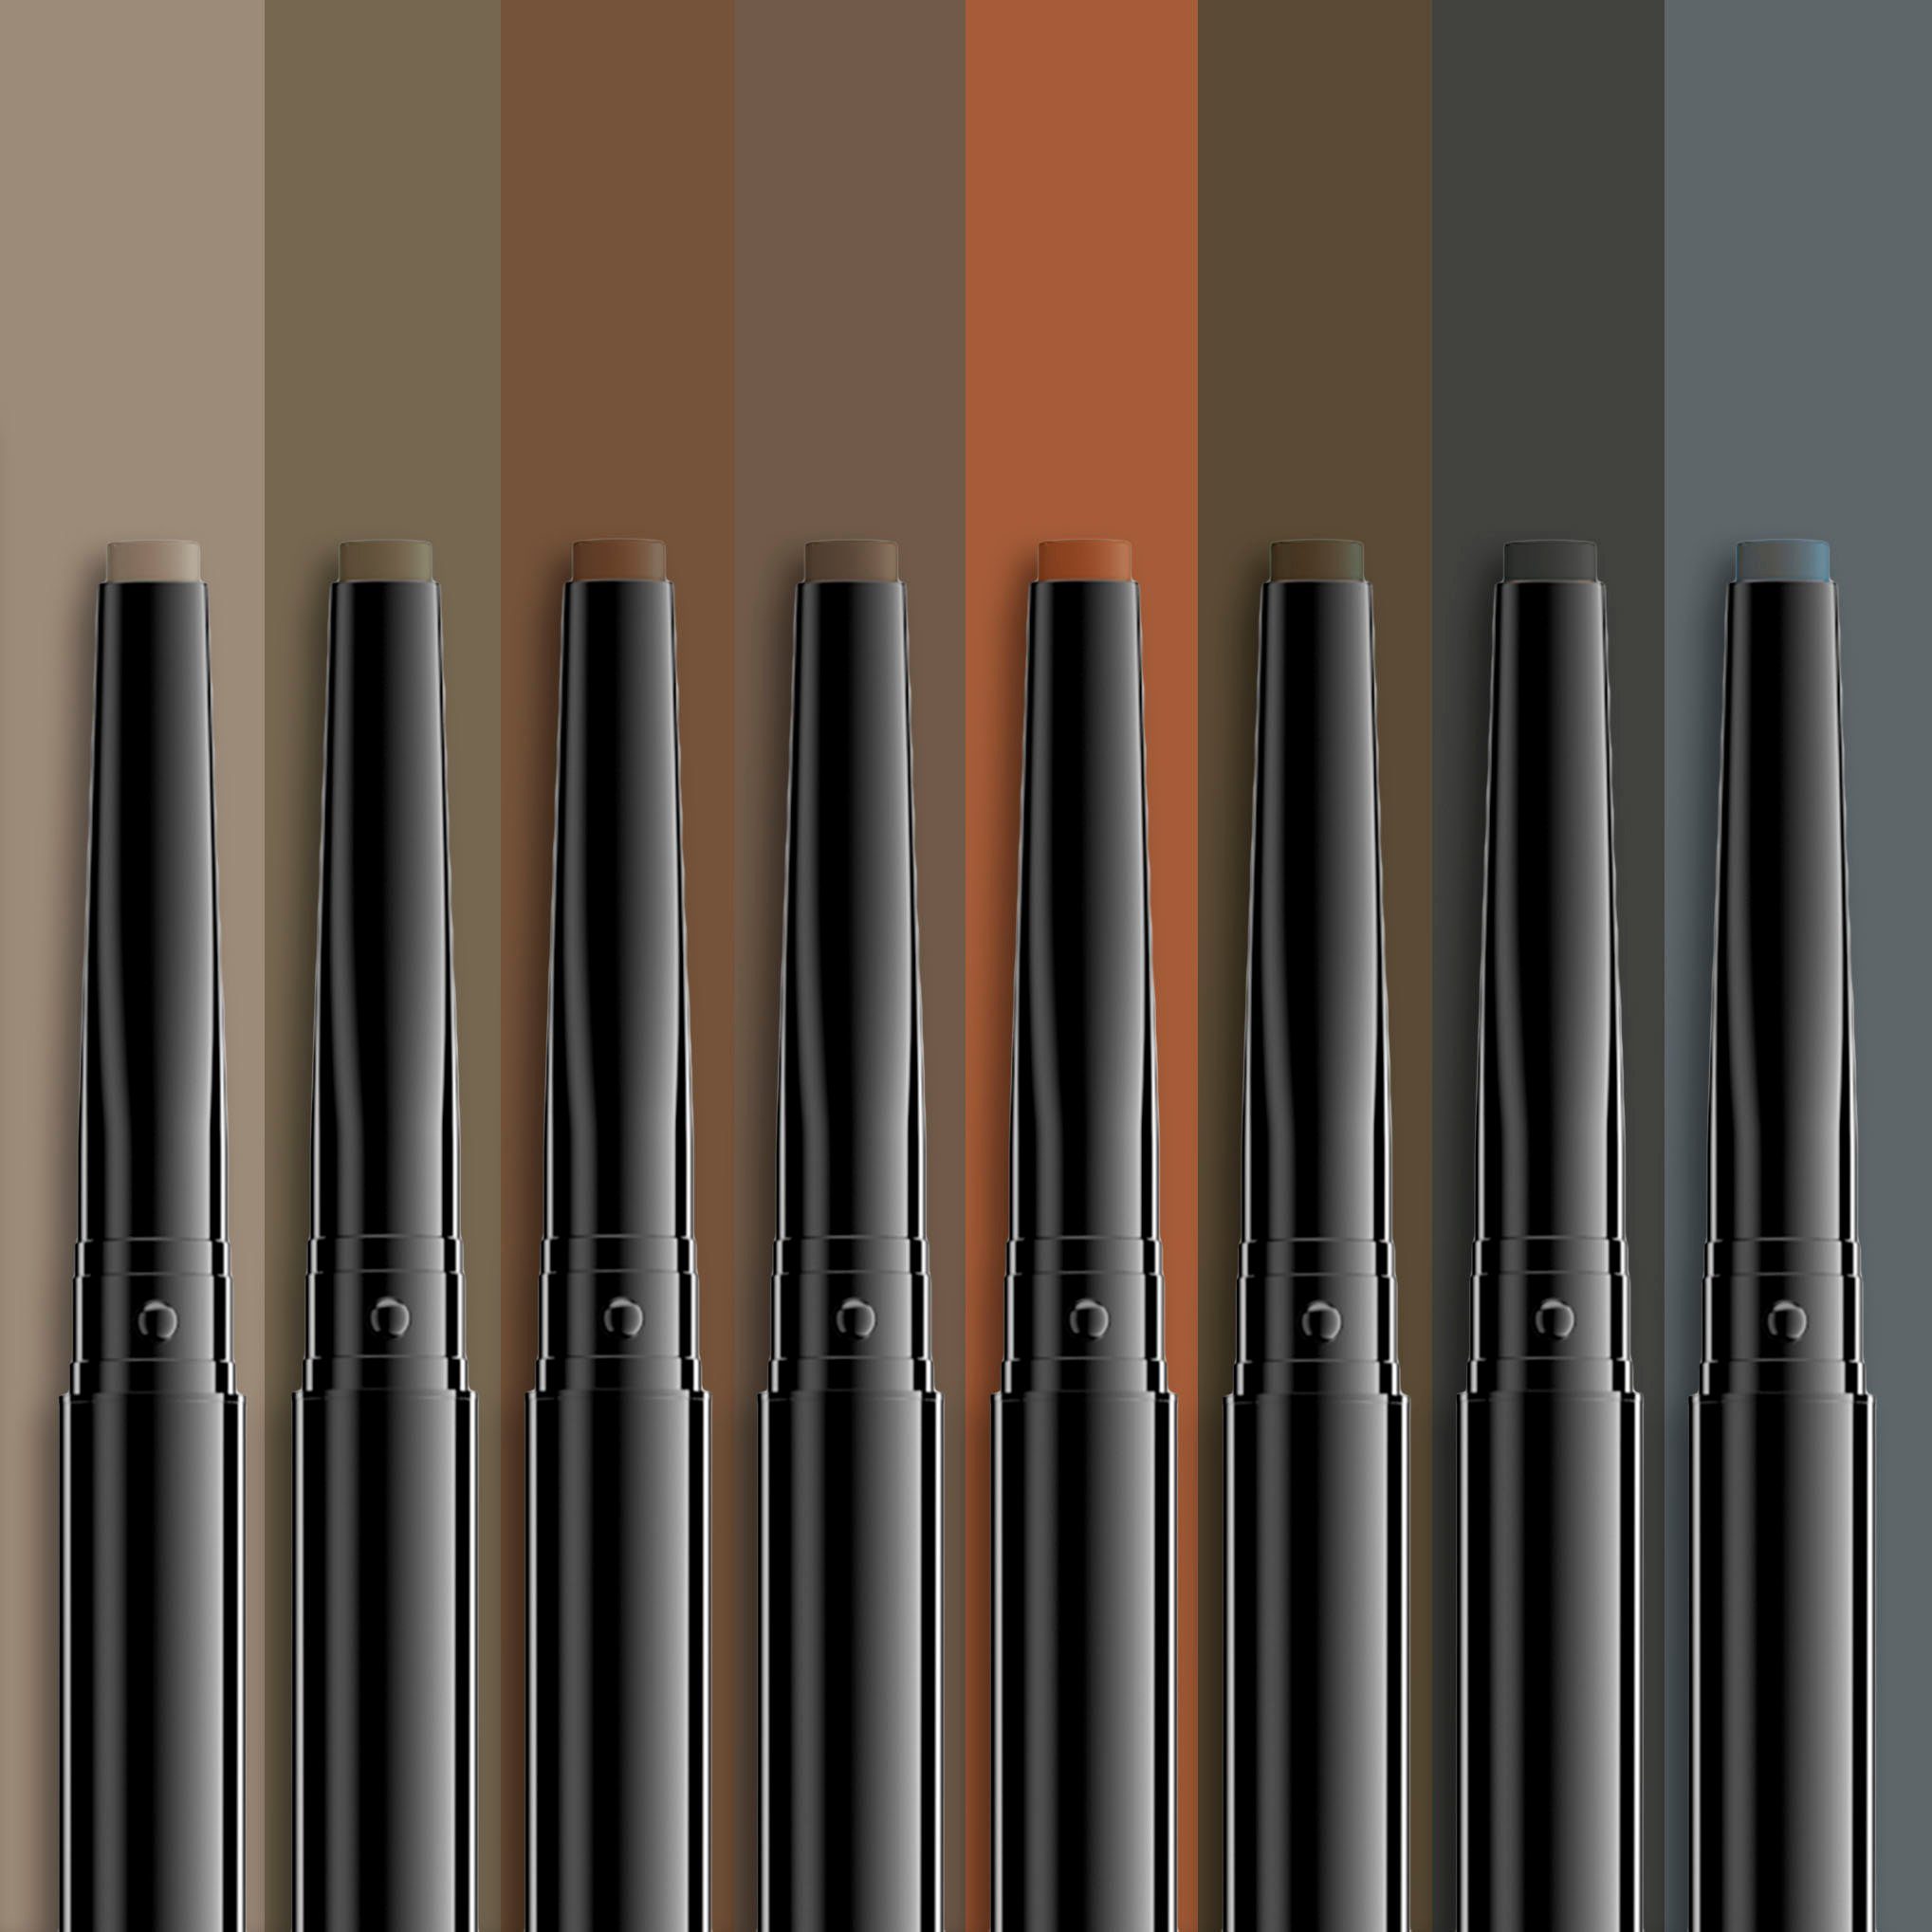 NYX Augenbrauen-Stift Brow Professional Precision Pencil taupe Makeup